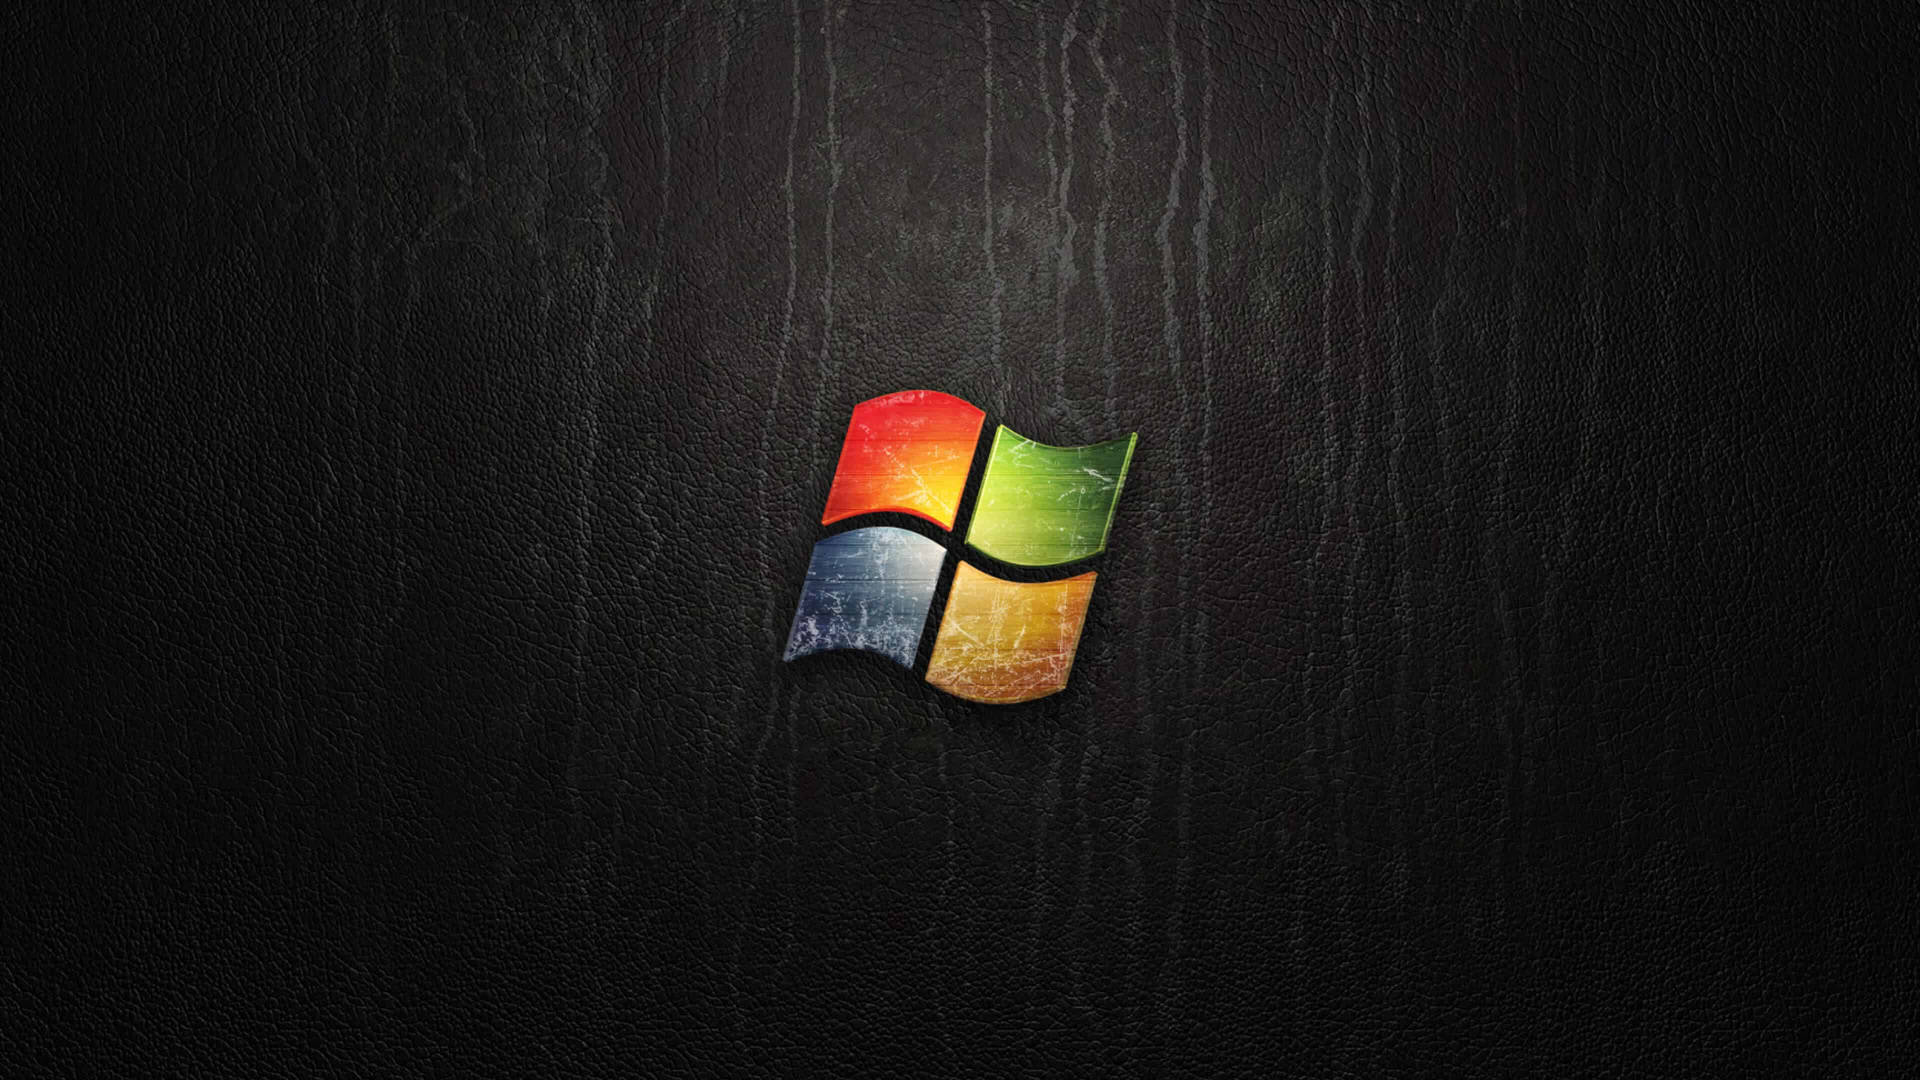 200+] Microsoft Wallpapers 